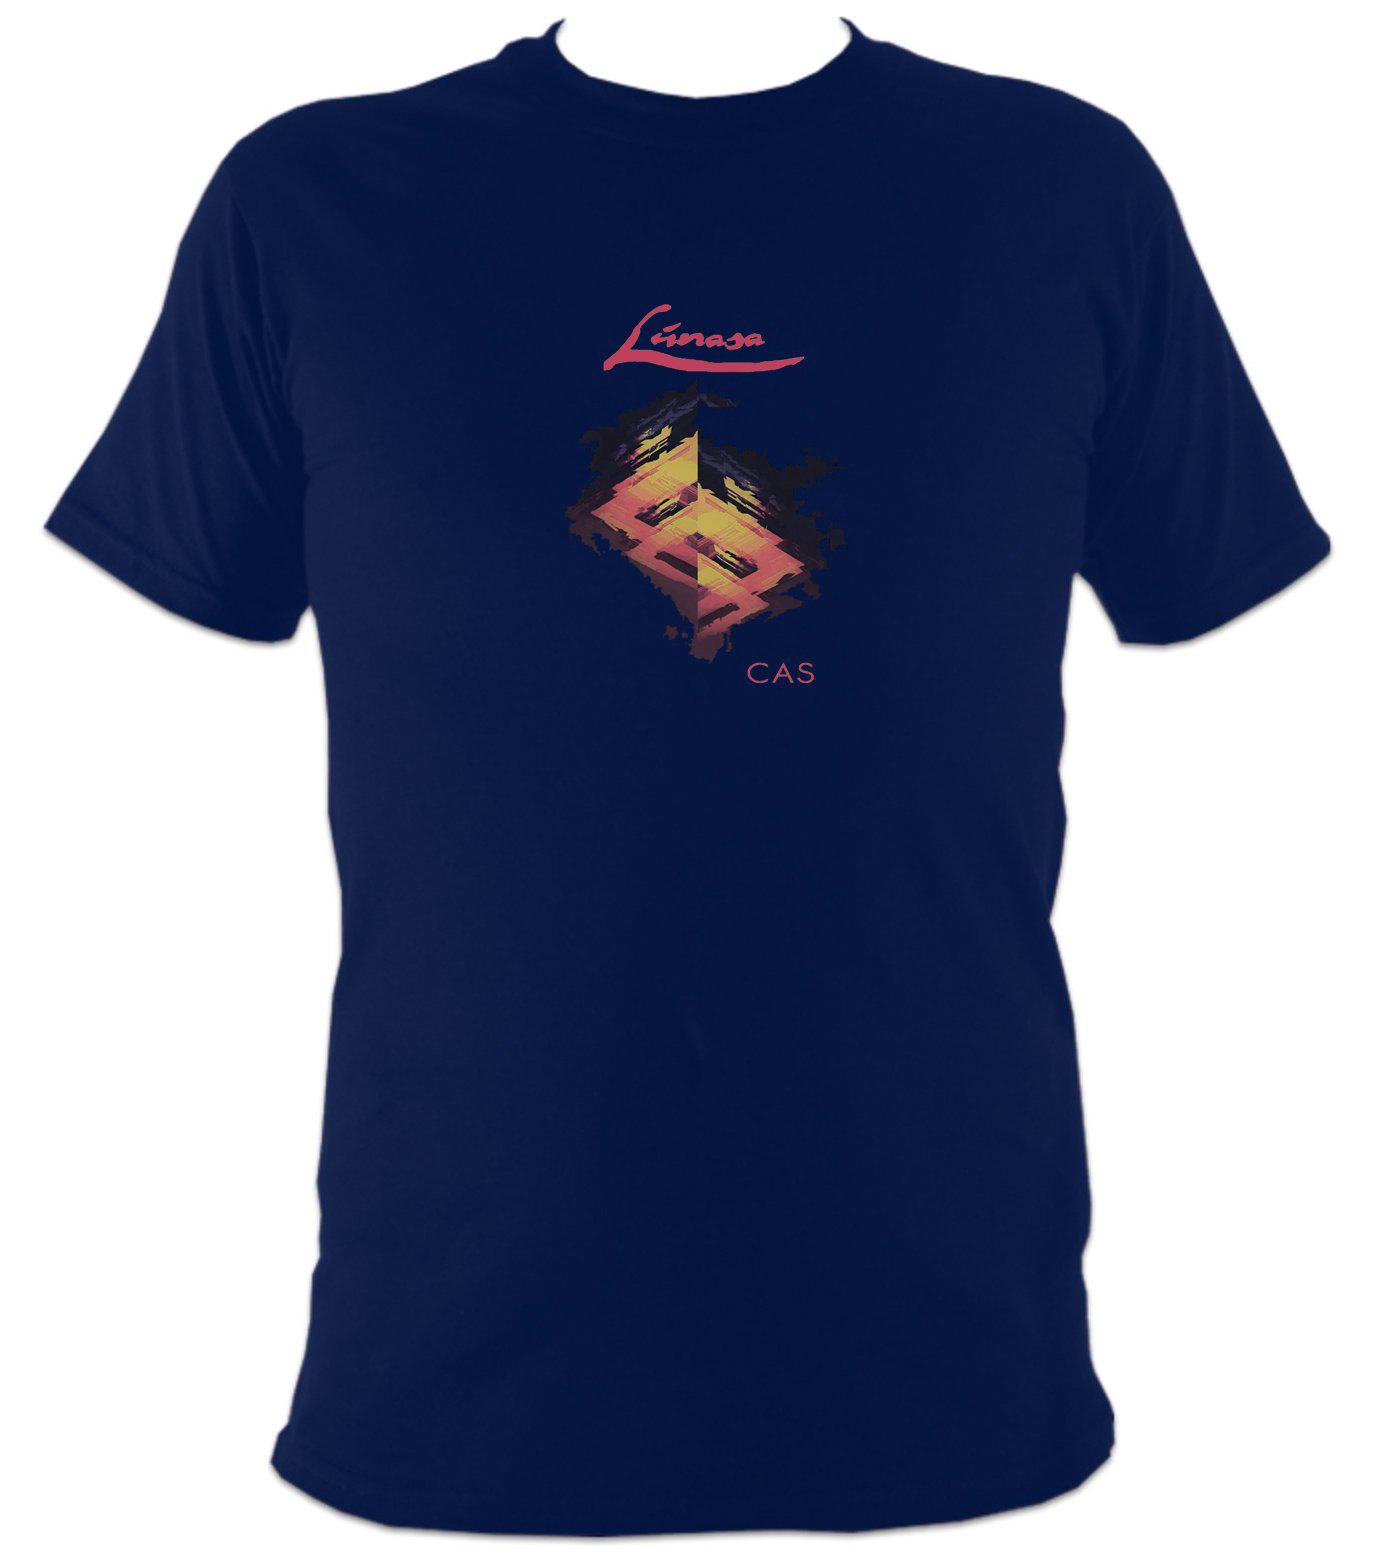 Lúnasa "Cas" T-shirt - T-shirt - Navy - Mudchutney